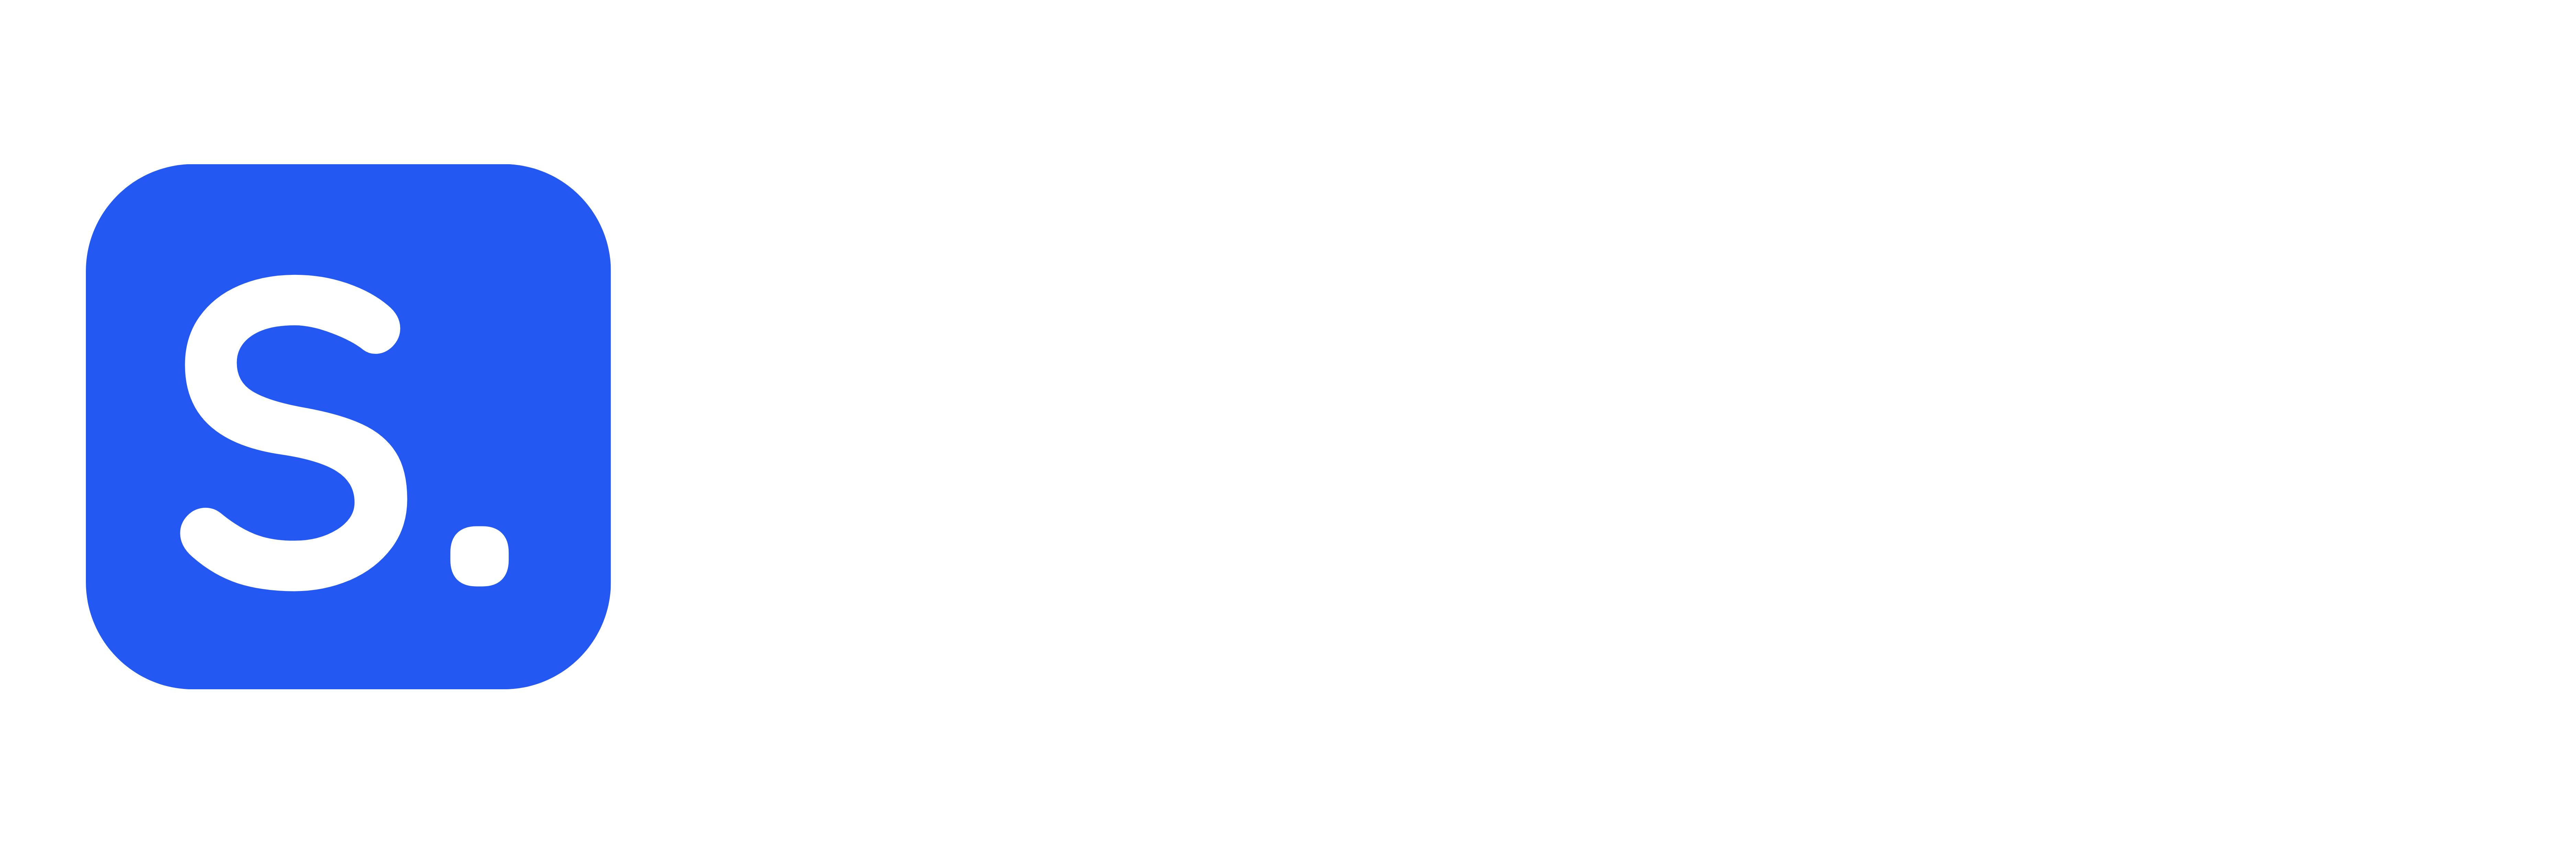 SiteStitch